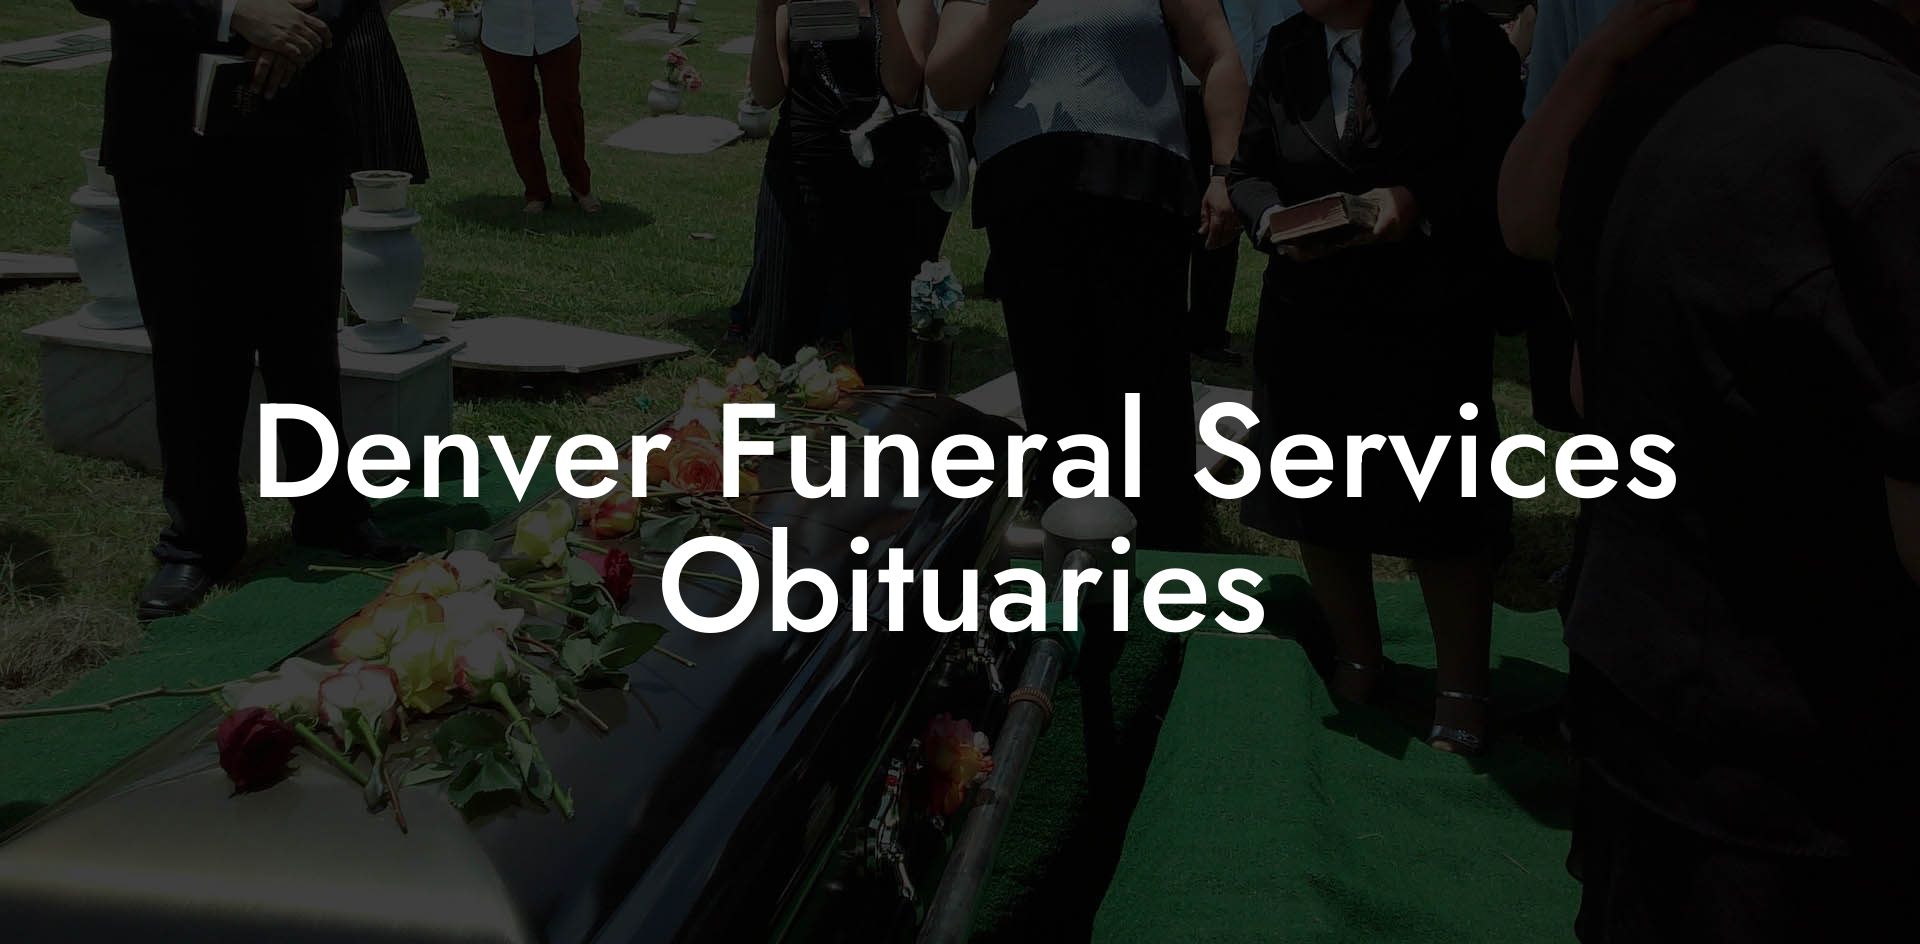 Denver Funeral Services Obituaries